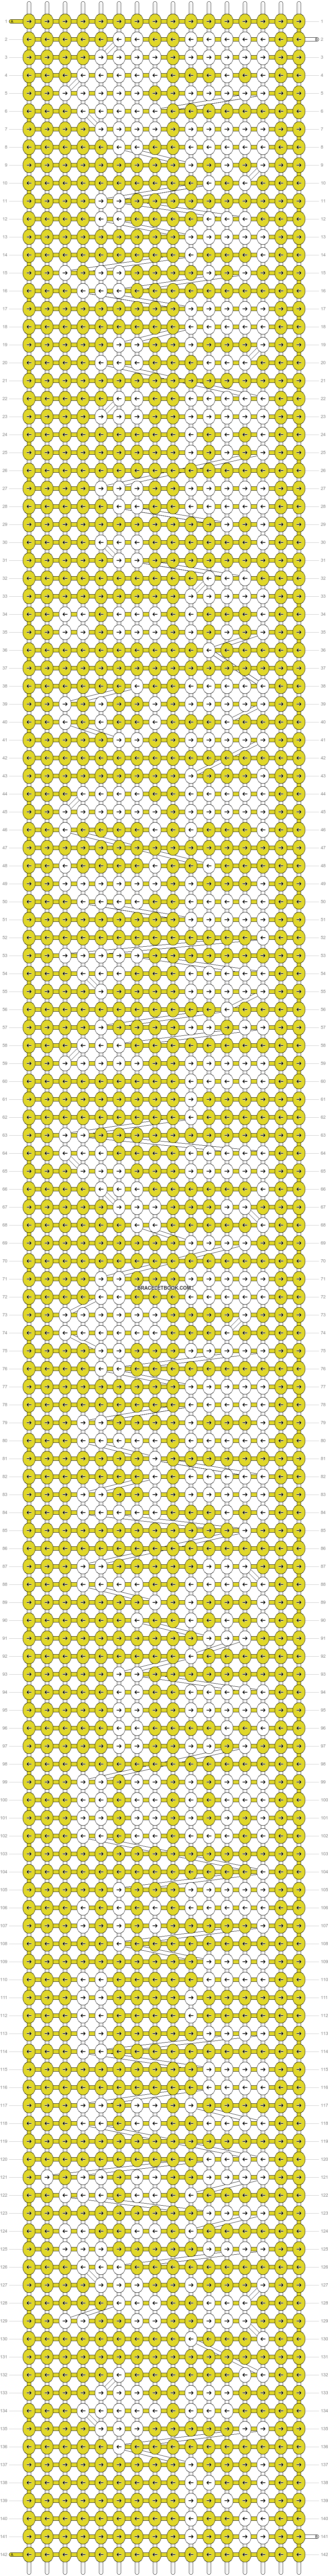 Alpha pattern #59423 variation #105323 pattern